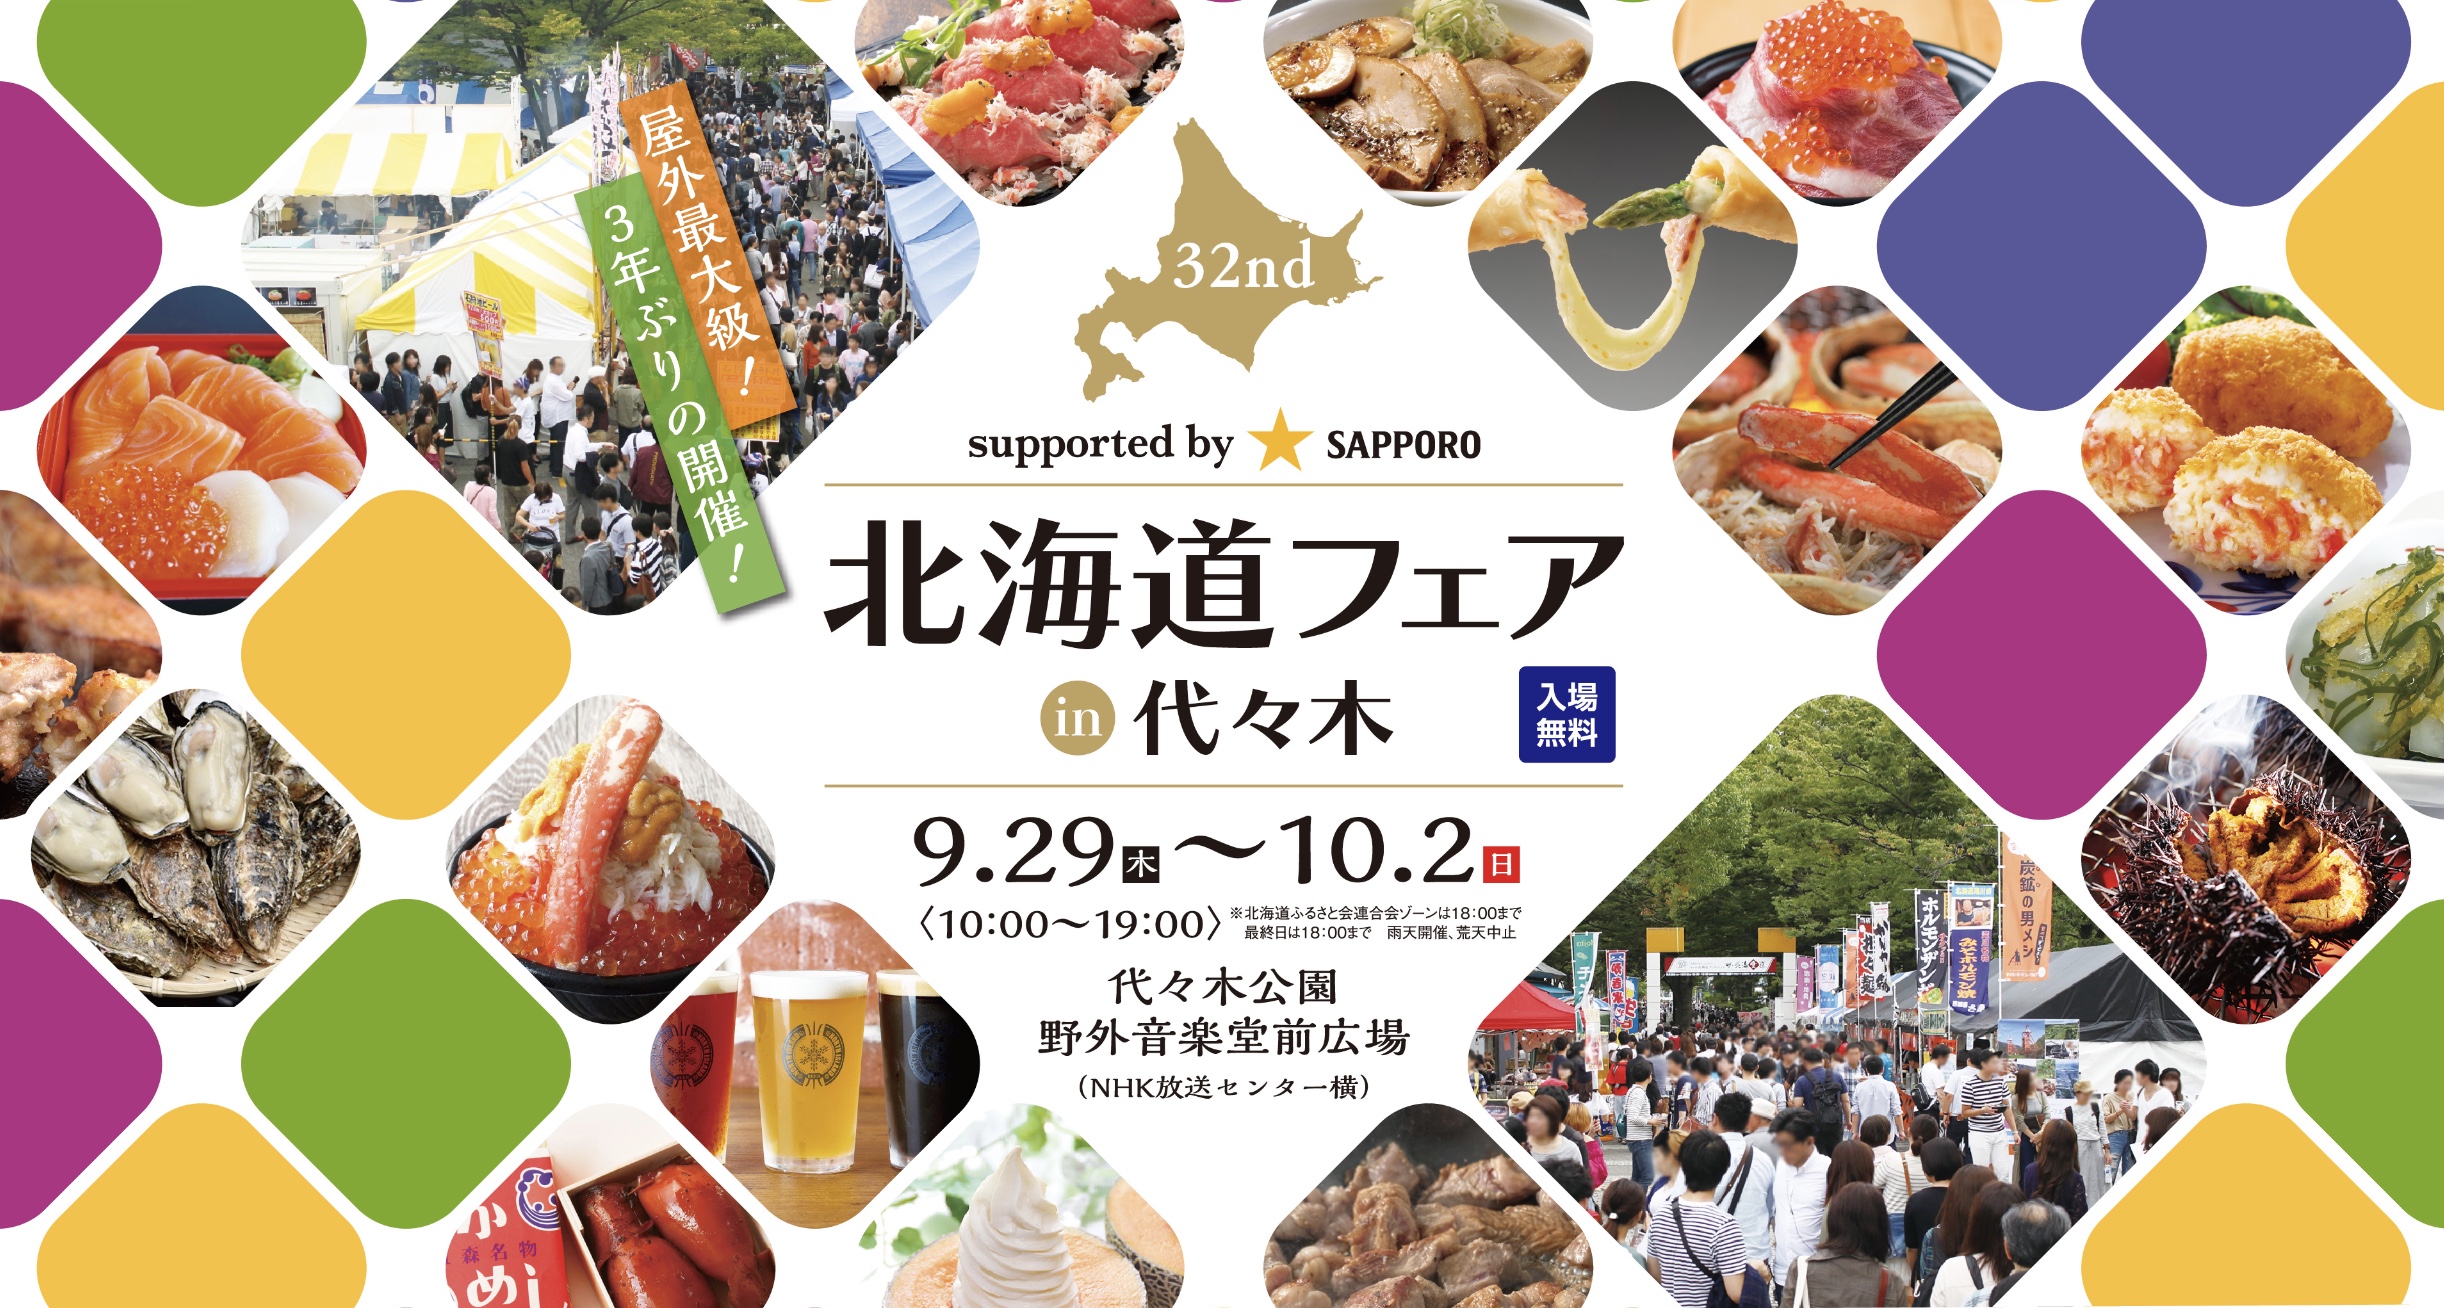 Hokkaido Food Festival